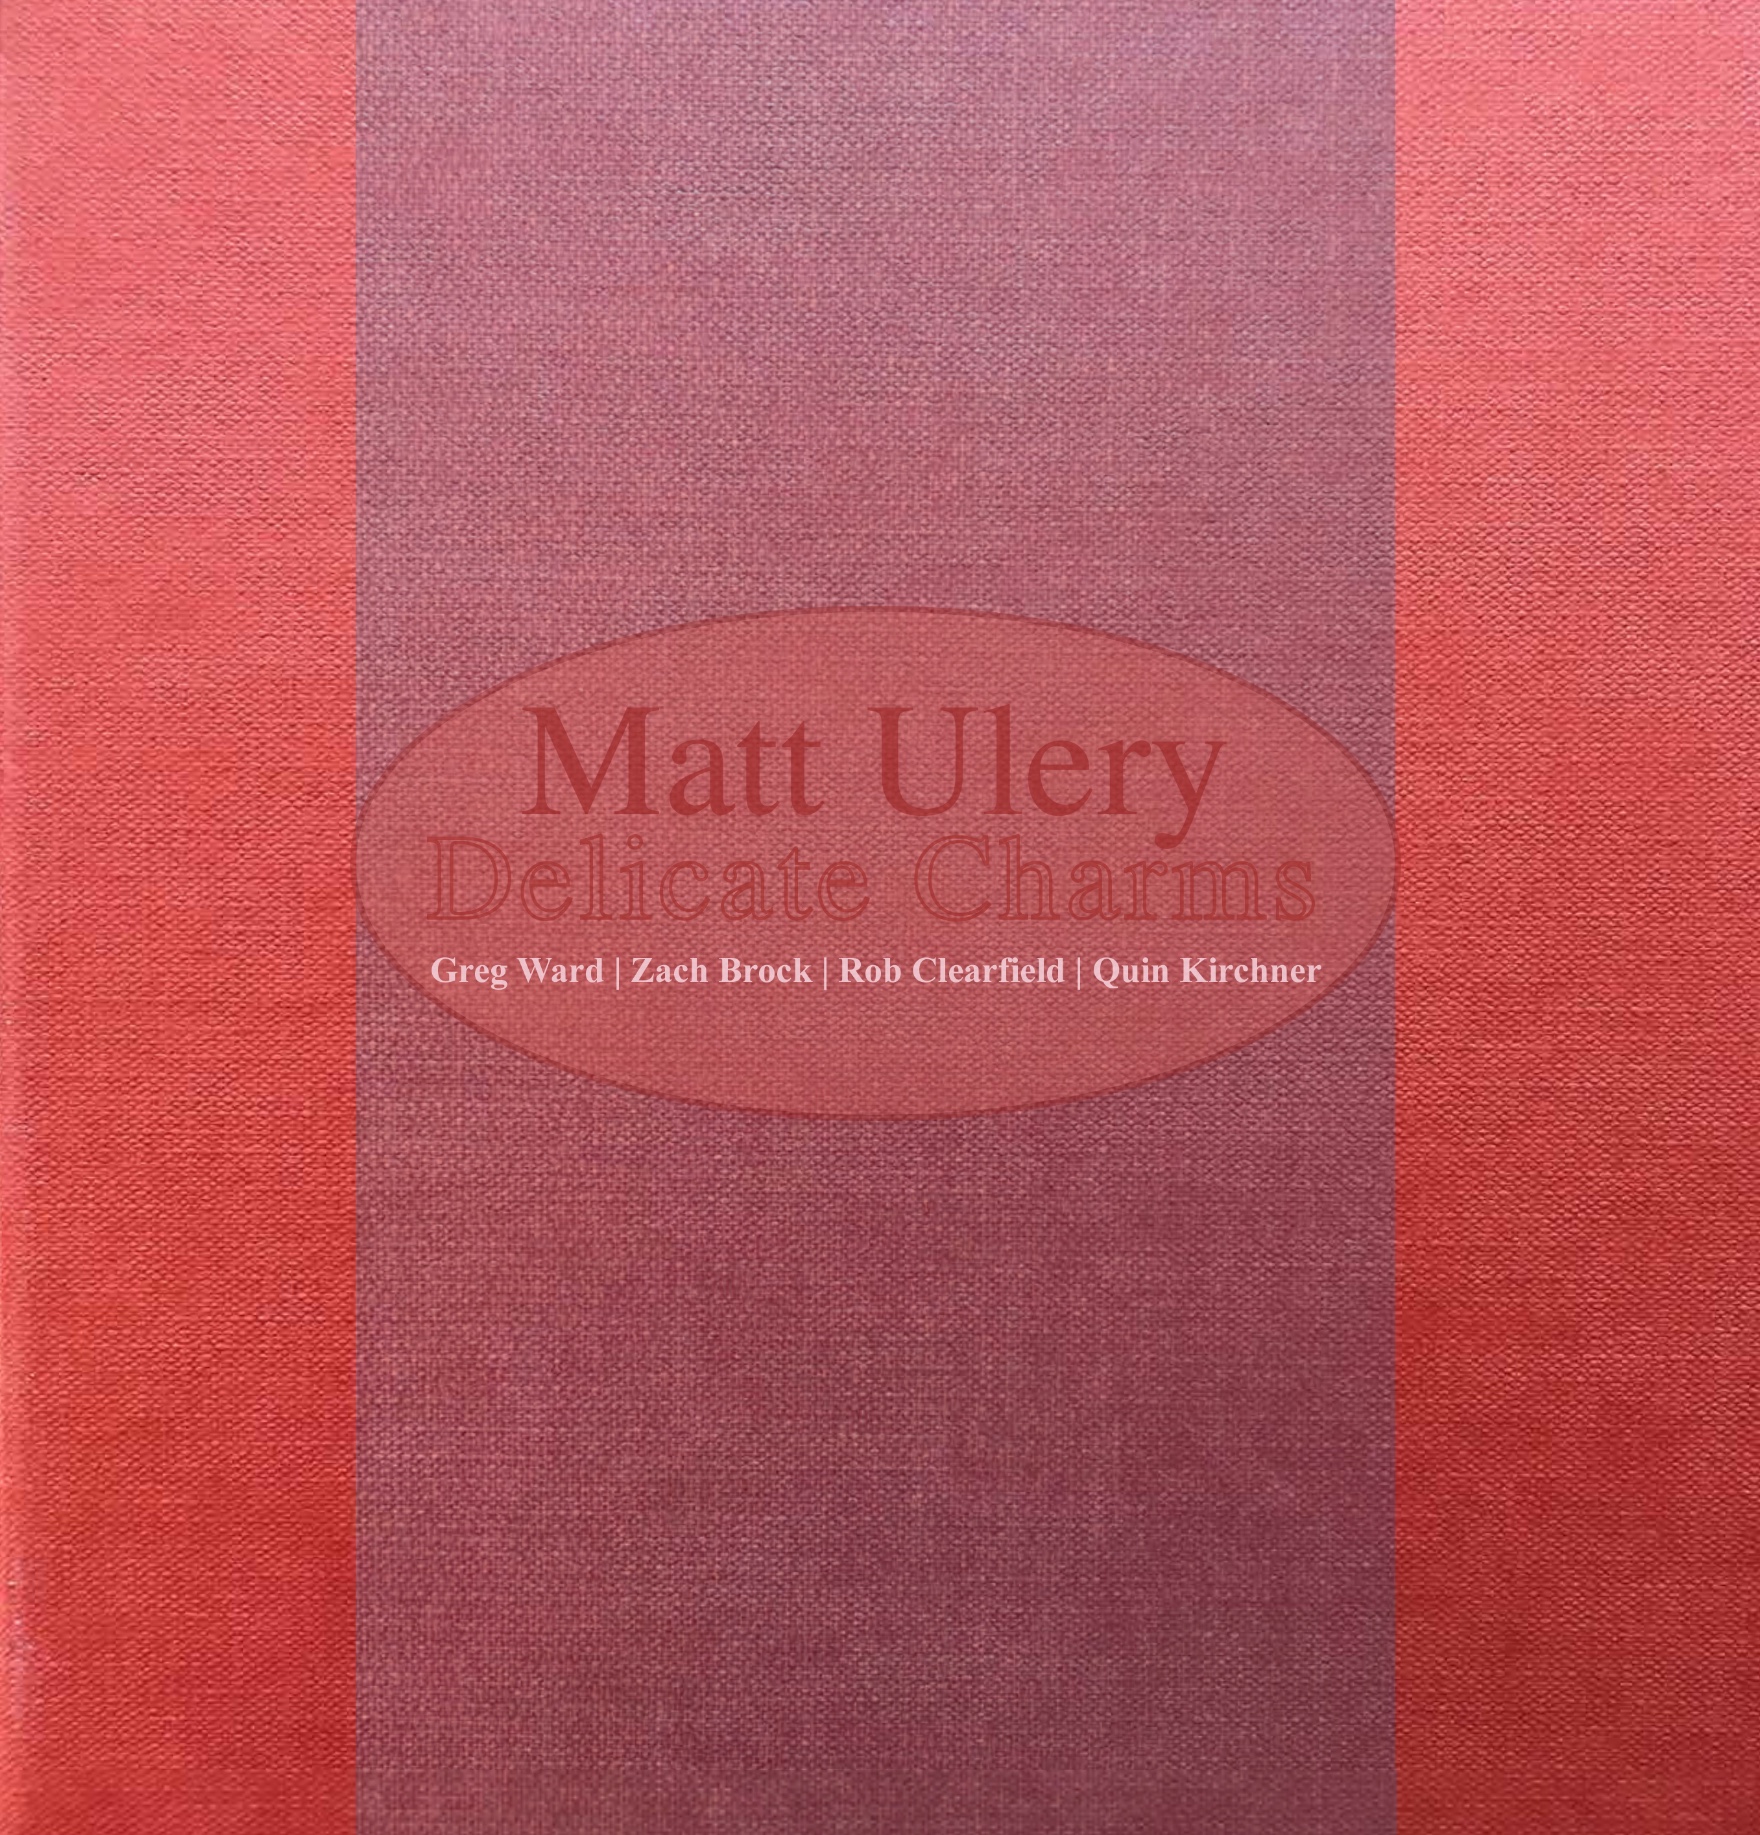 MATT ULERY - Delicate Charms cover 